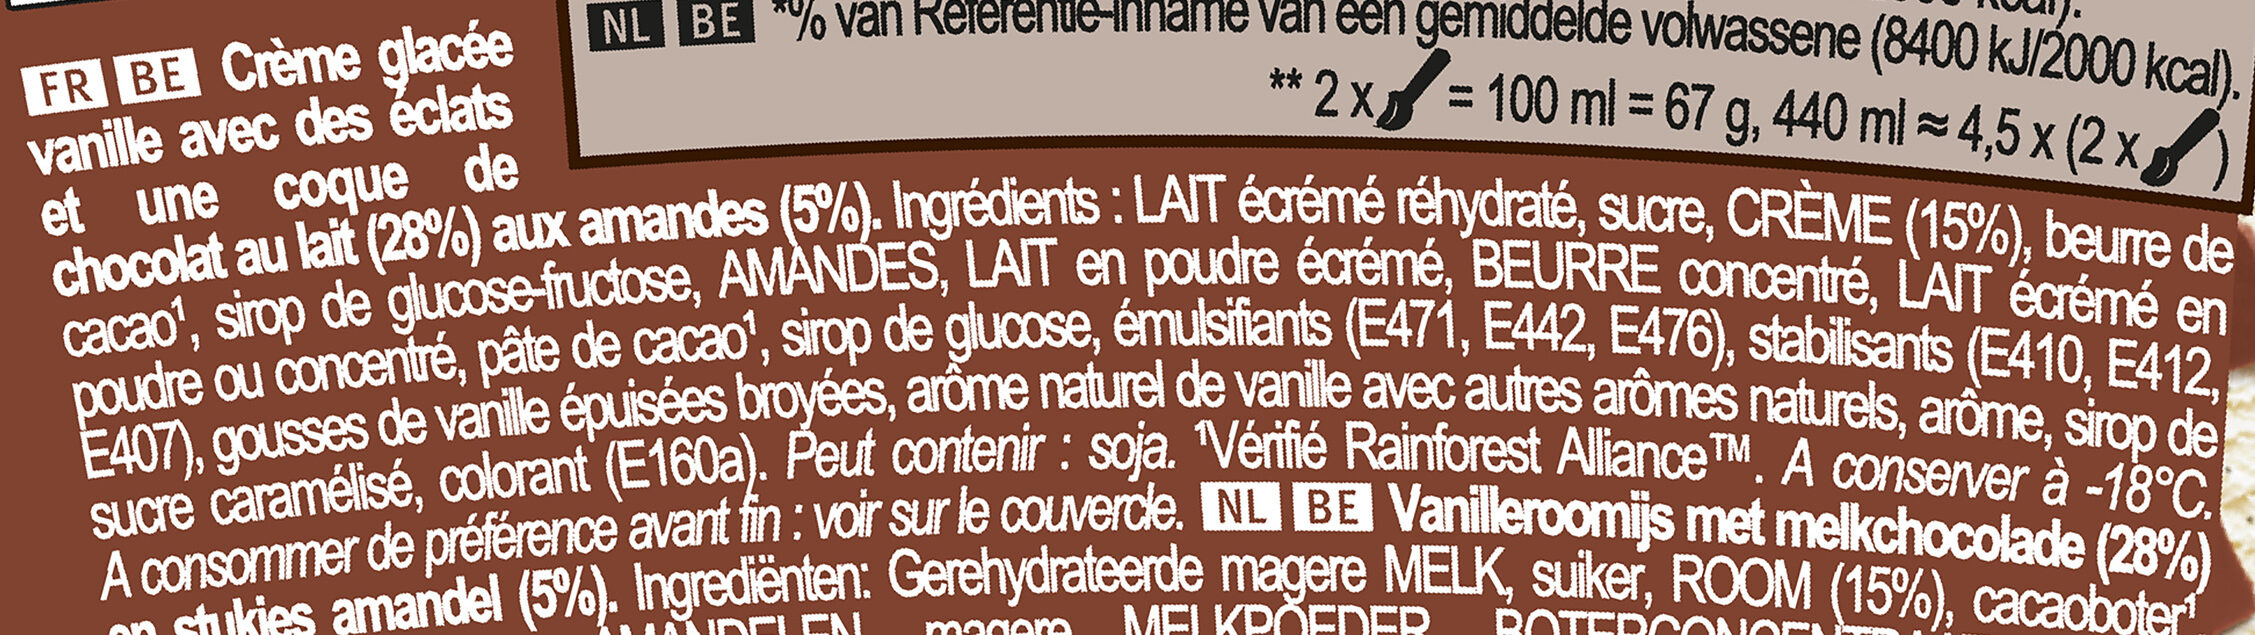 Pot Vanille Amande - Ingredientes - fr